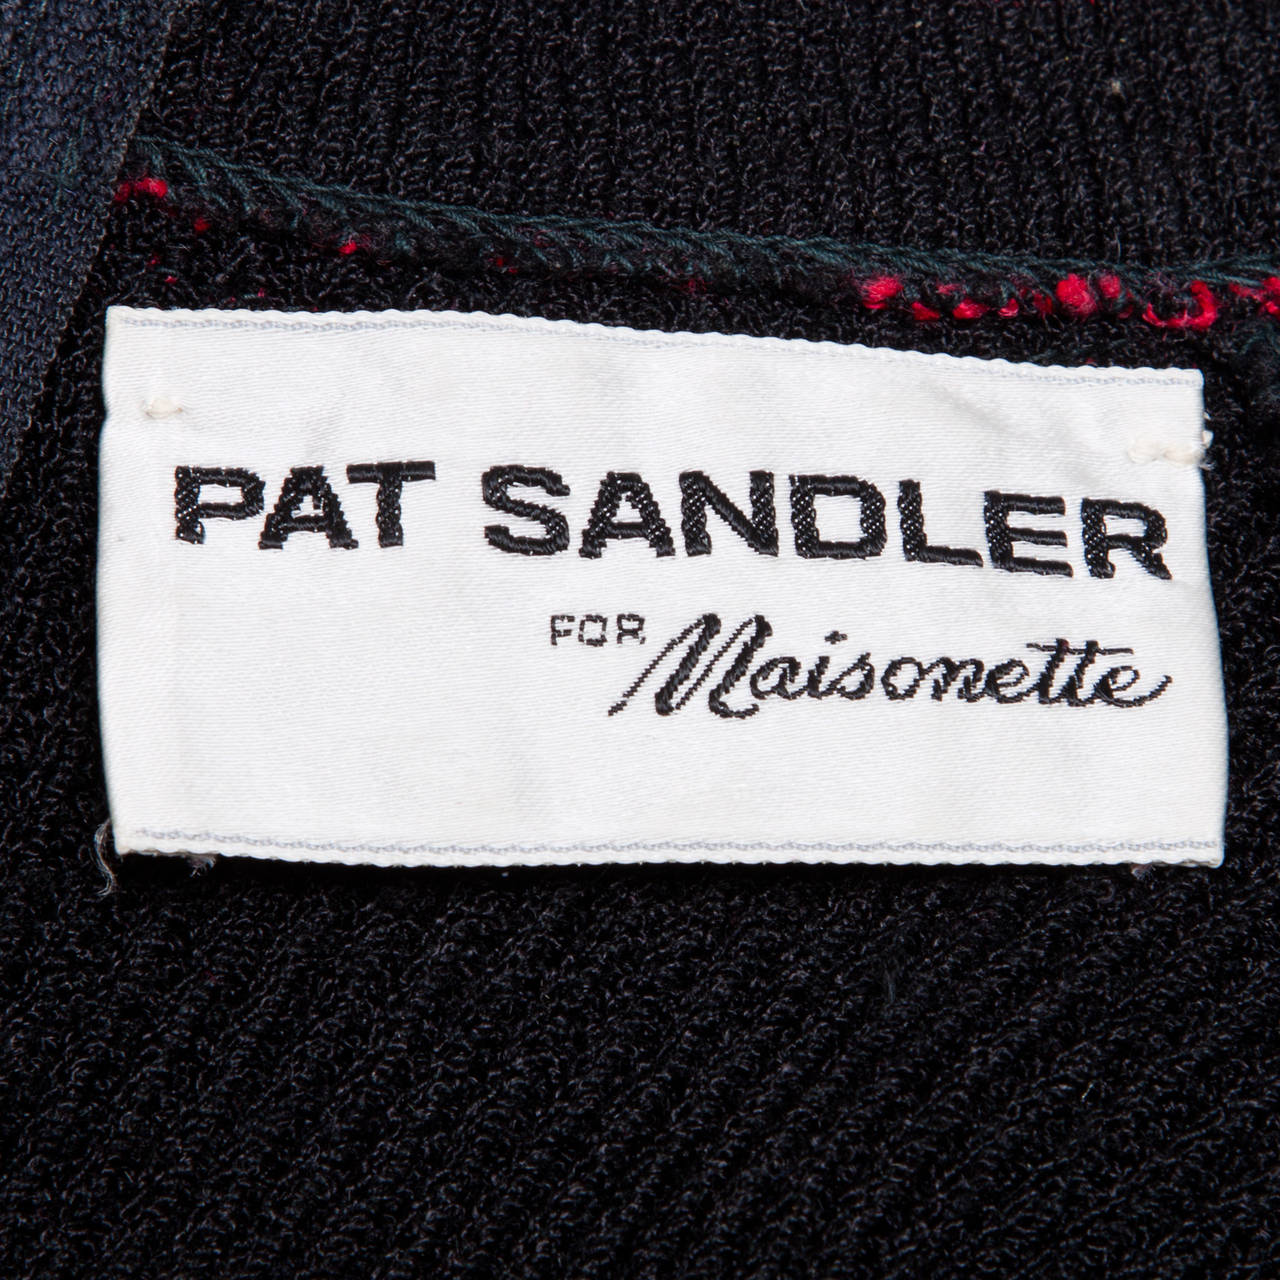 Pat Sandler Vintage 1970s Knit Polka Dot + Striped Dress 2